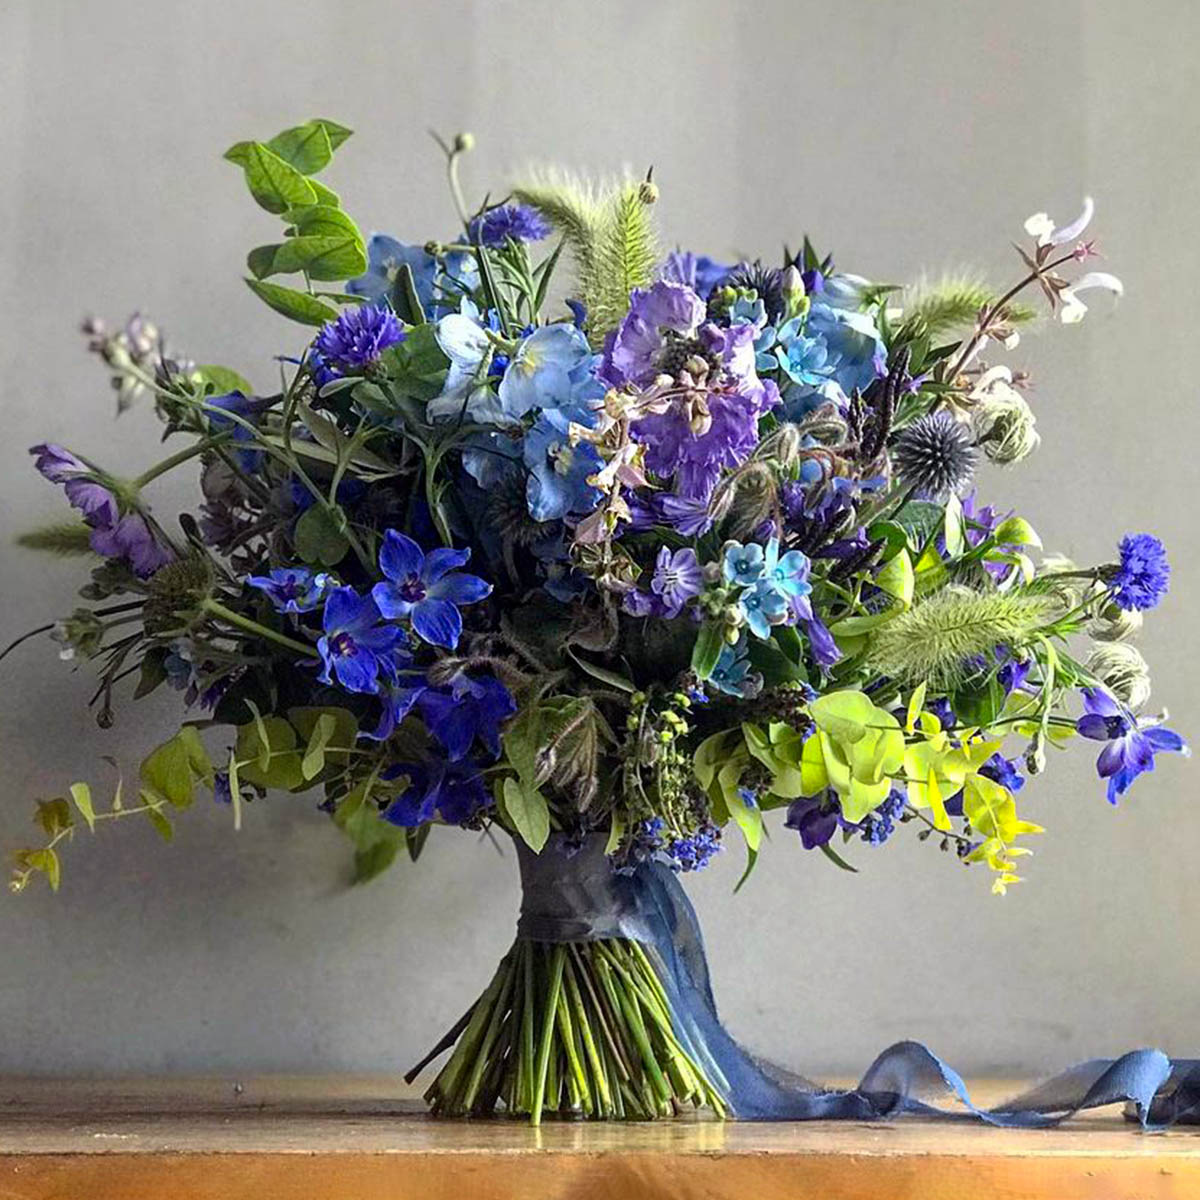 floral-designers-favorite-blue-flowers-for-a-boys-floral-bouquet-featured